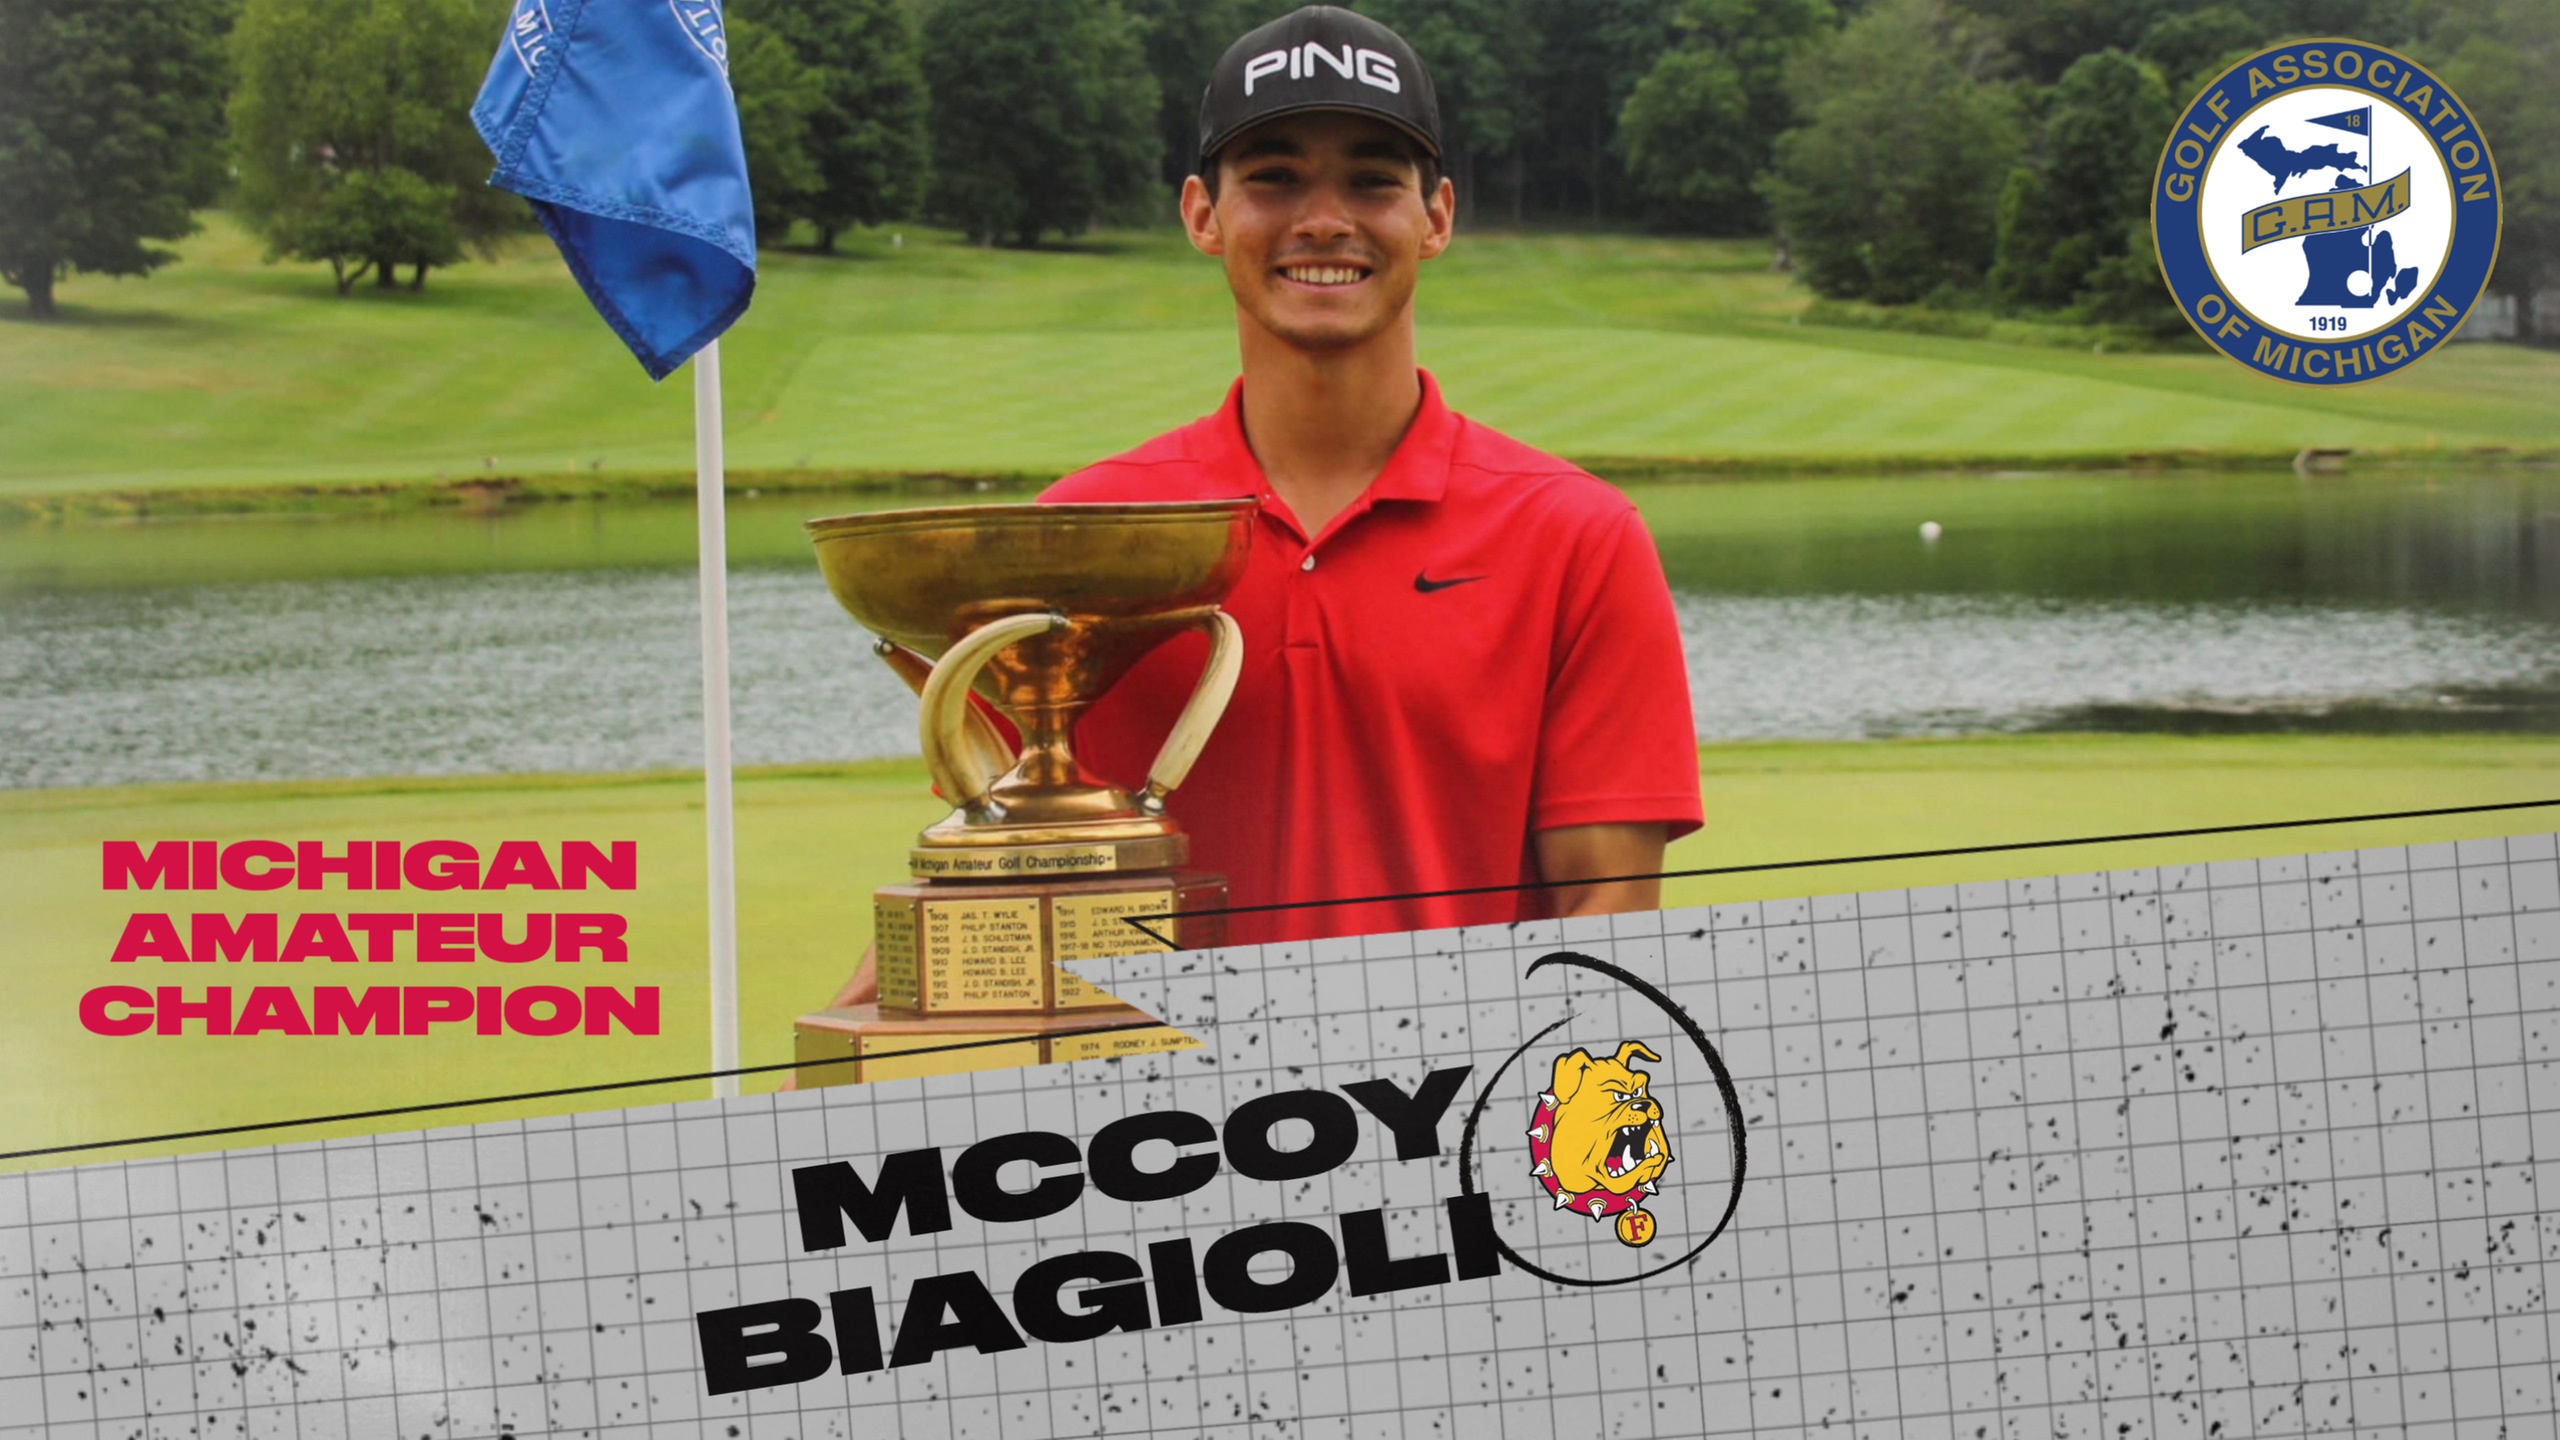 Ferris State's McCoy Biagioli Wins Michigan Amateur Championship To Earn Spot In U.S. Amateur